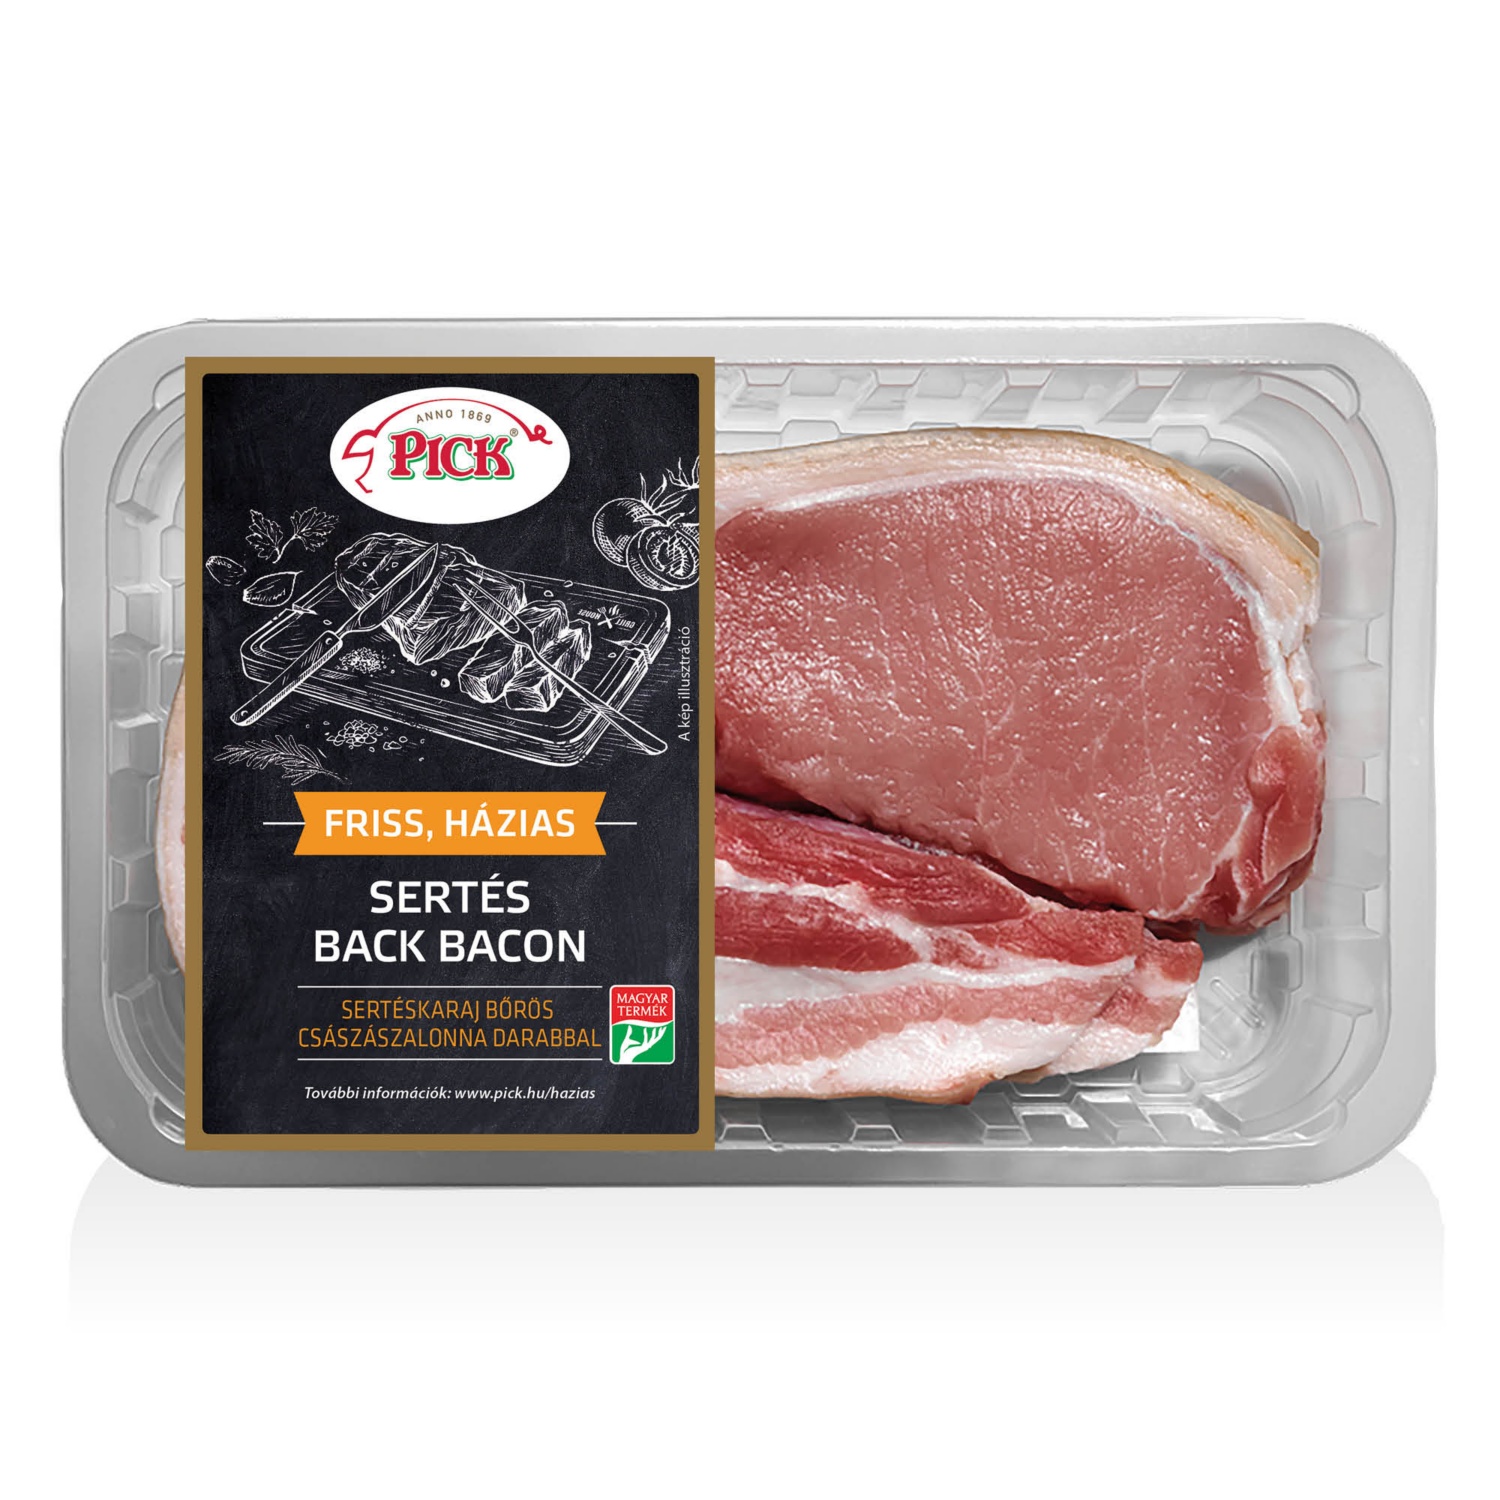 PICK Friss sertés back bacon, 1 kg